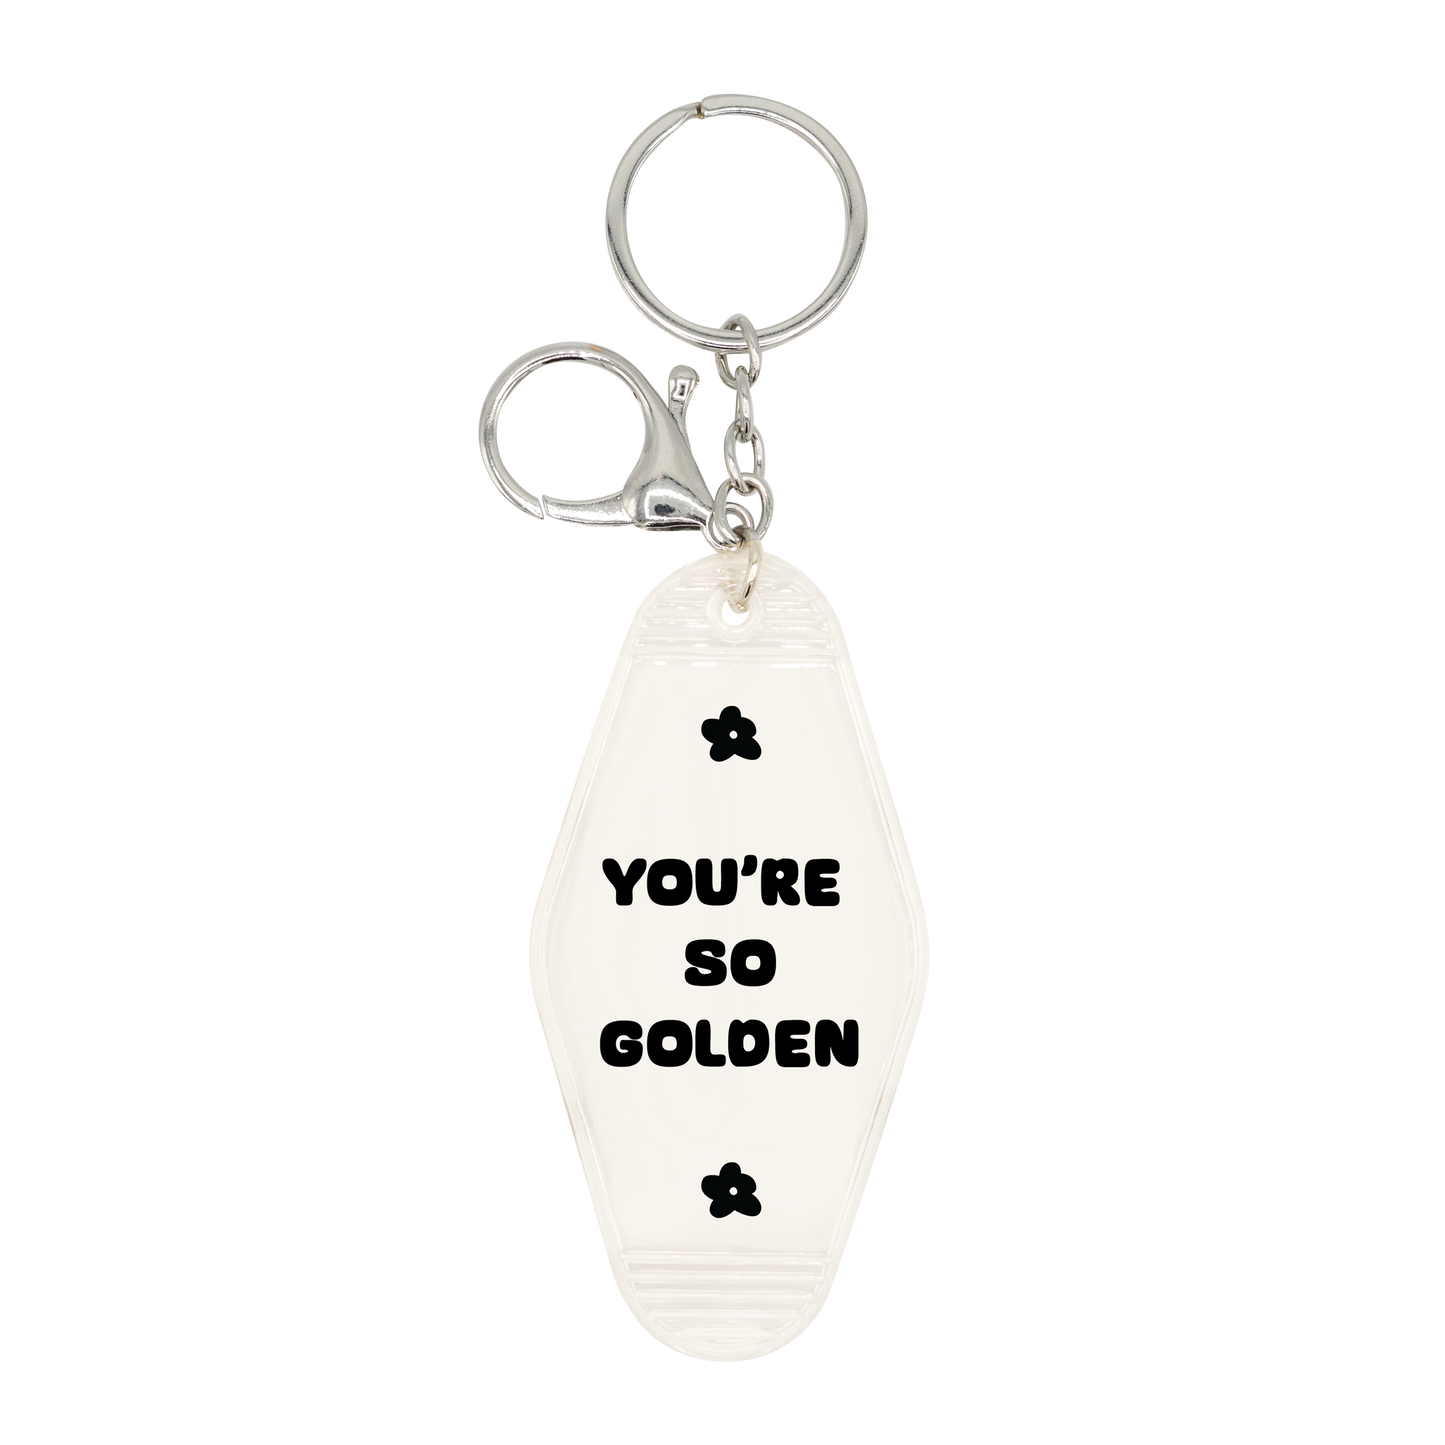 Golden Harry Styles Keychain